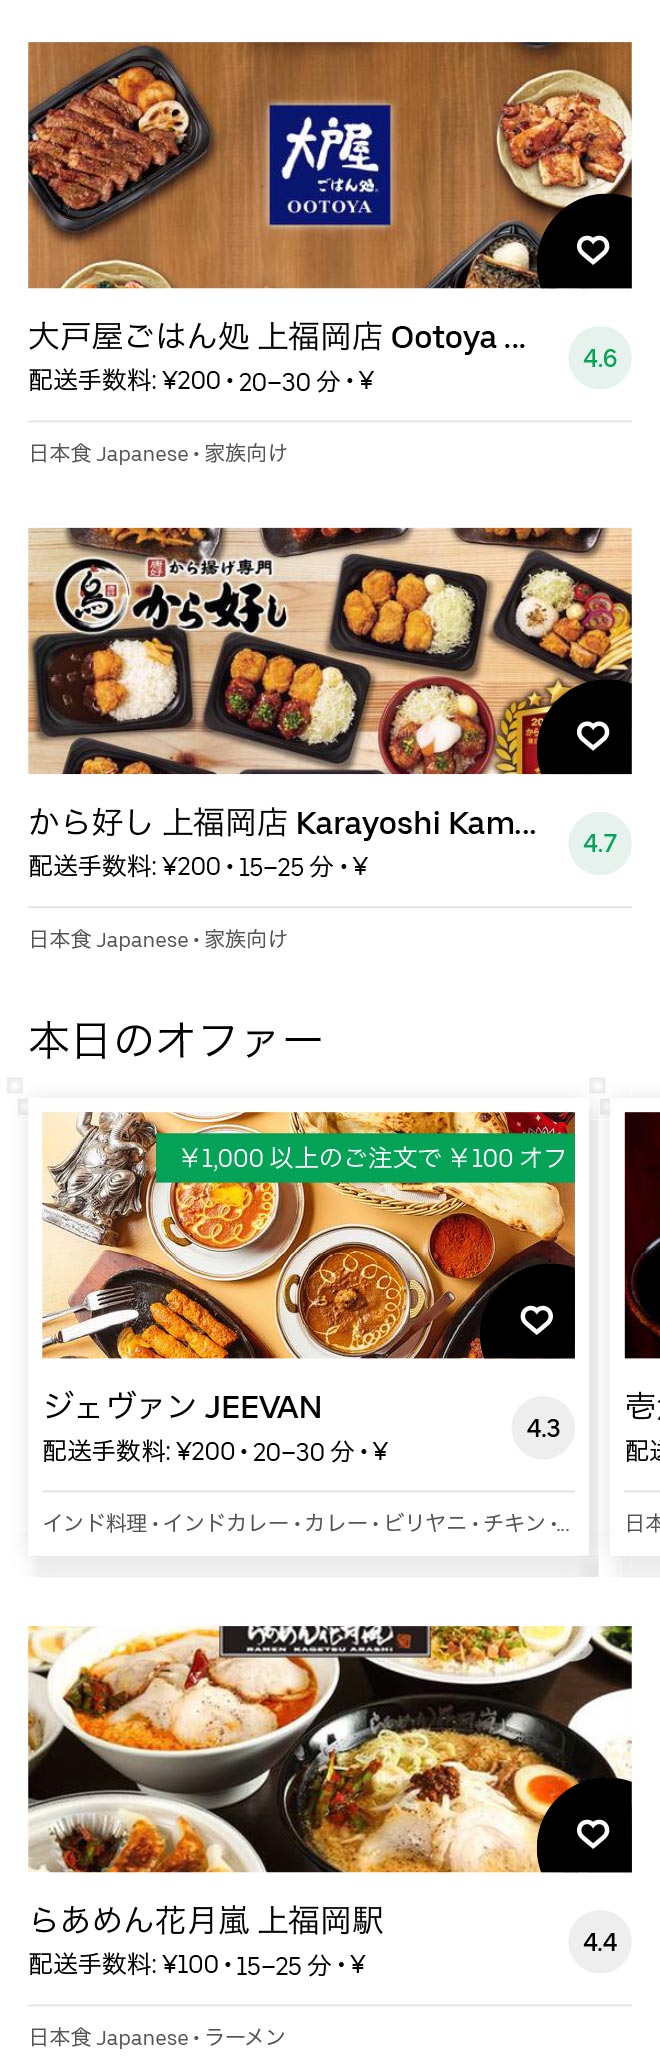 Kamifukuoka menu 2011 03